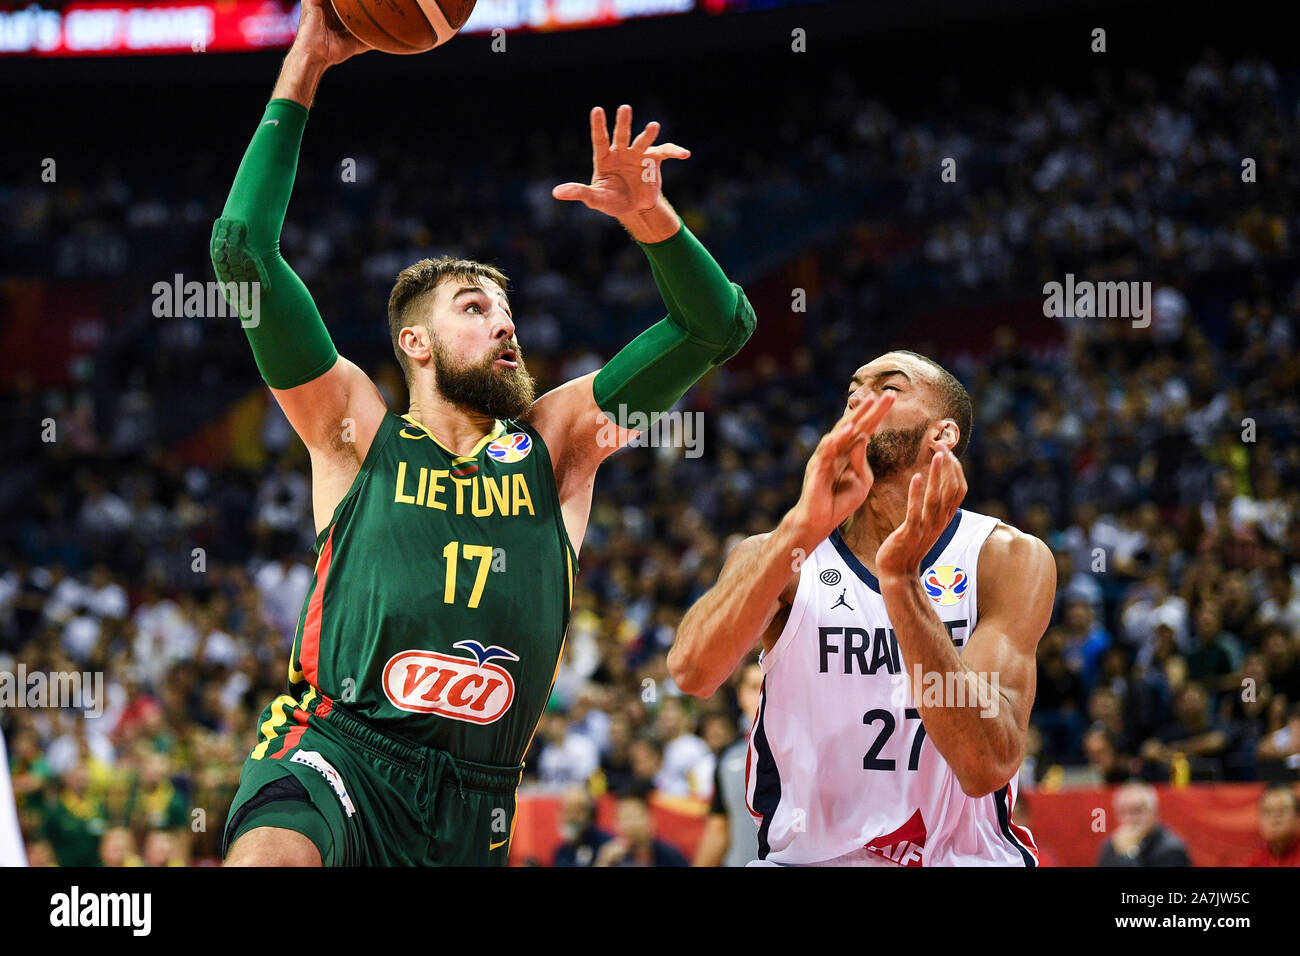 Jugador de baloncesto lituano fotografías e imágenes de alta resolución -  Alamy